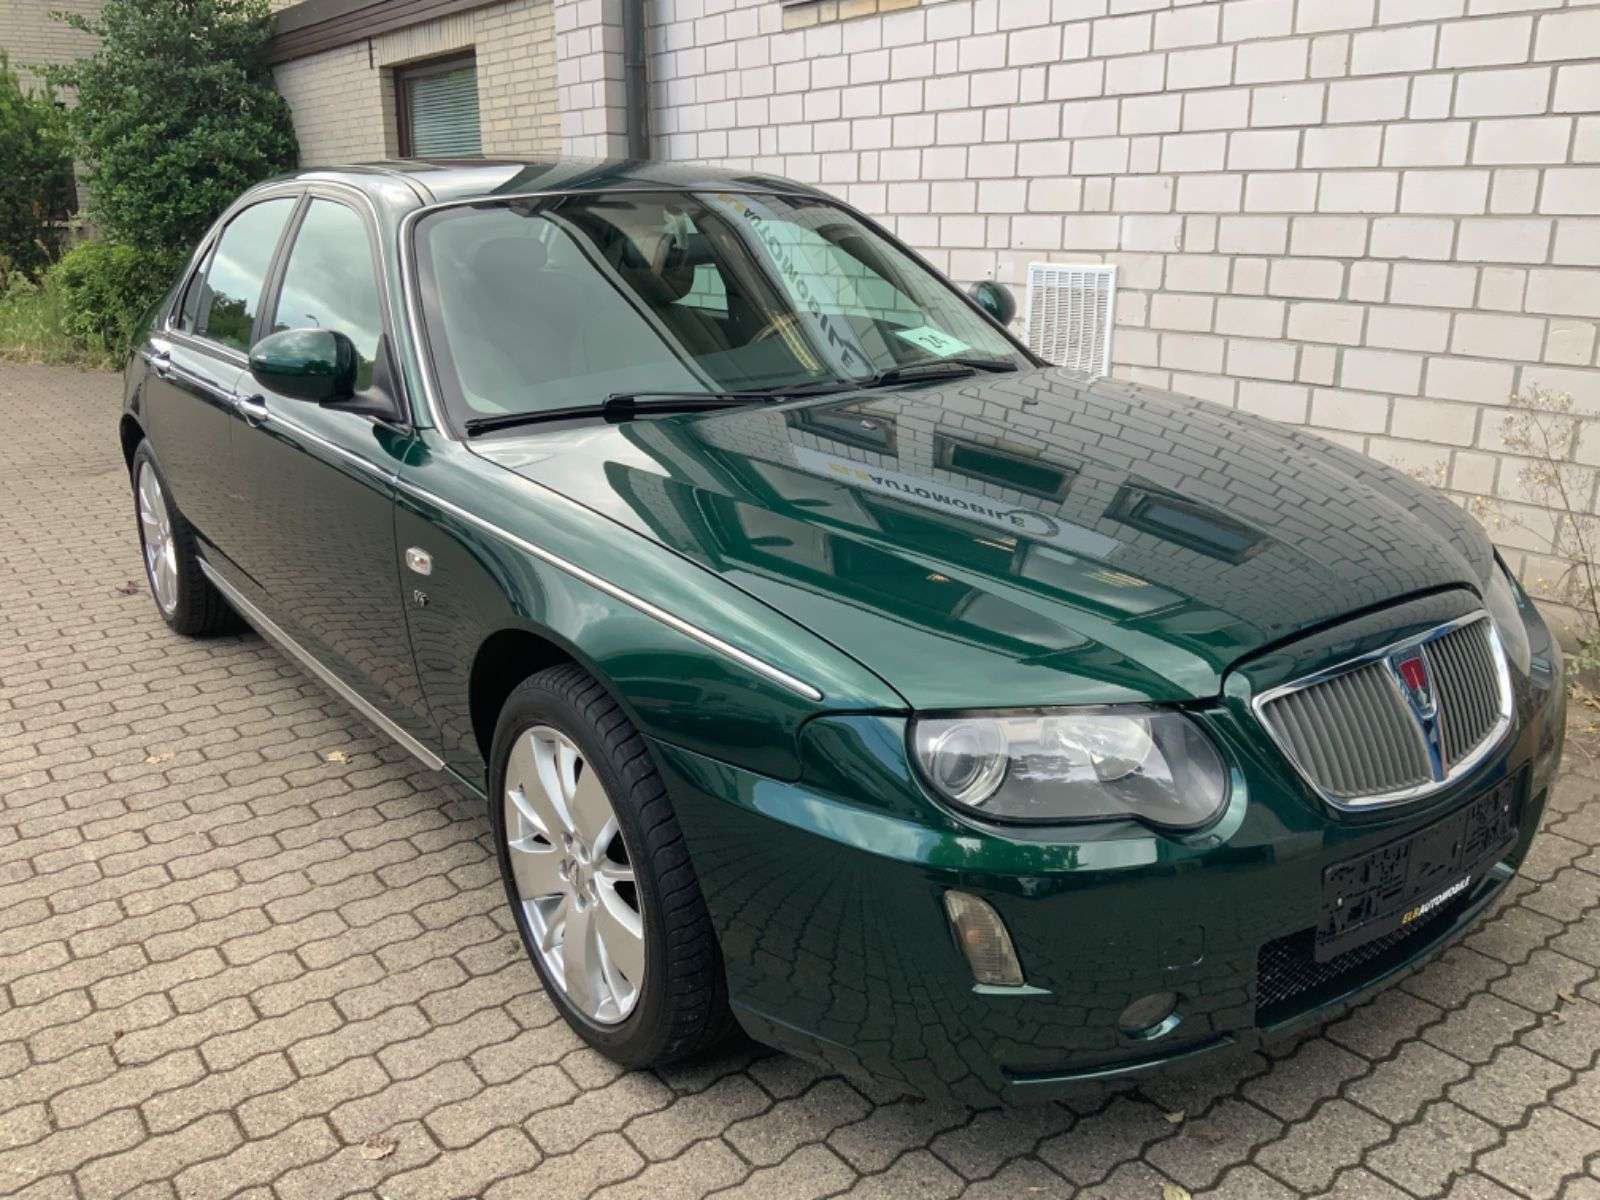 Rover 75 Sedan in Green used in Rellingen for € 14,990.-